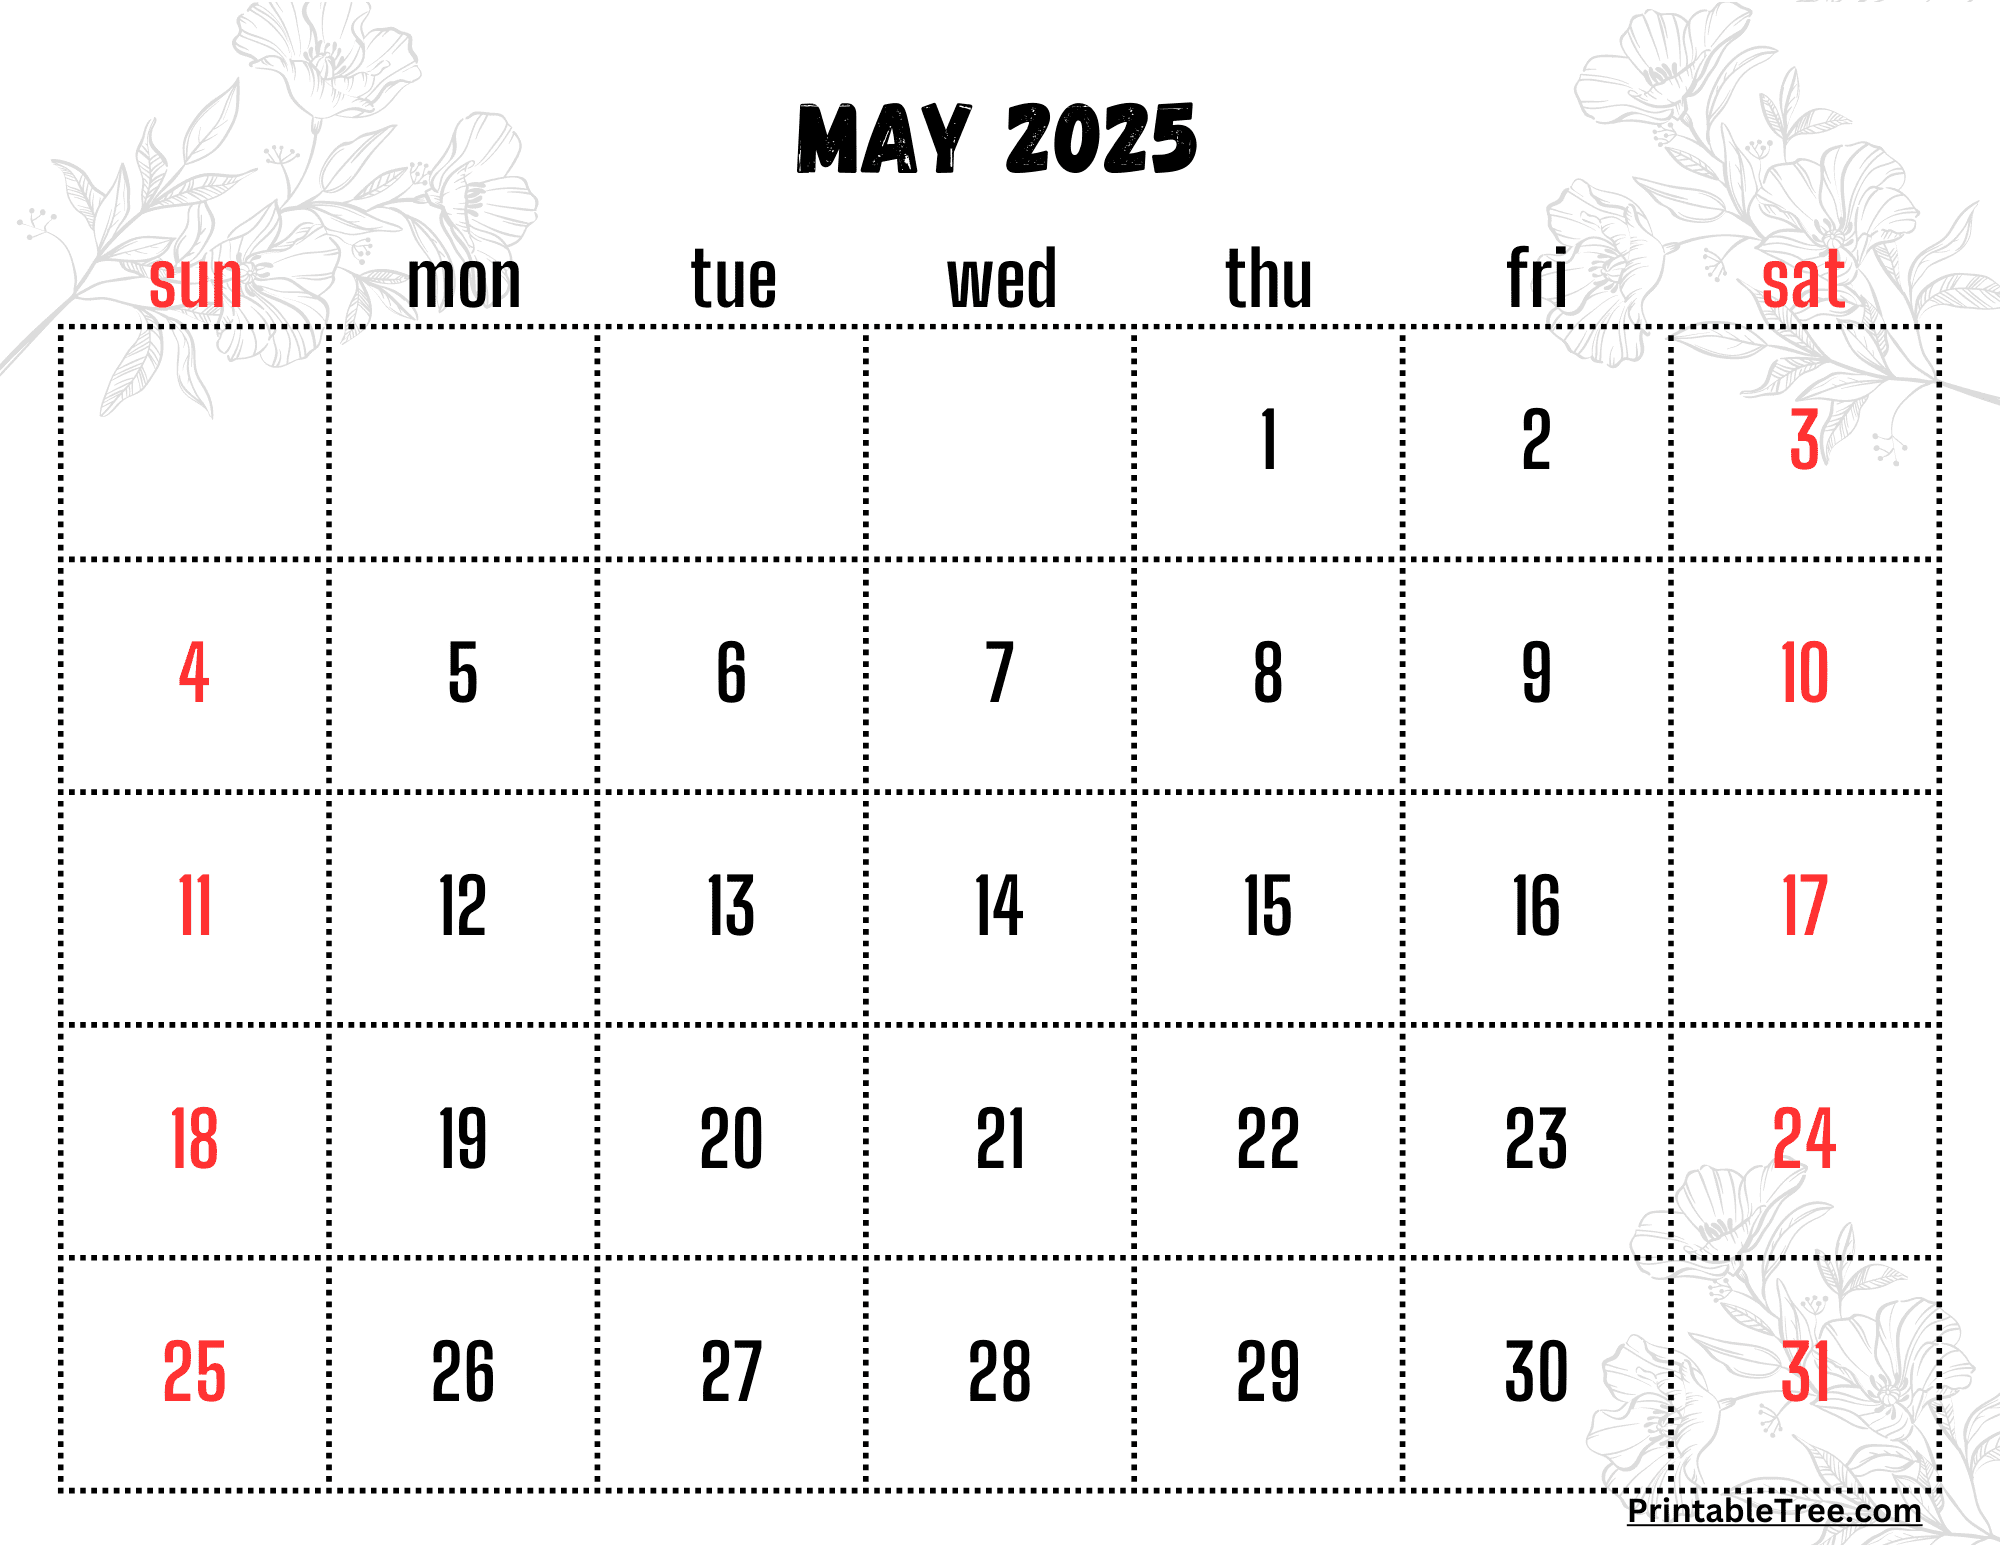 May 2025 Calendar Floral